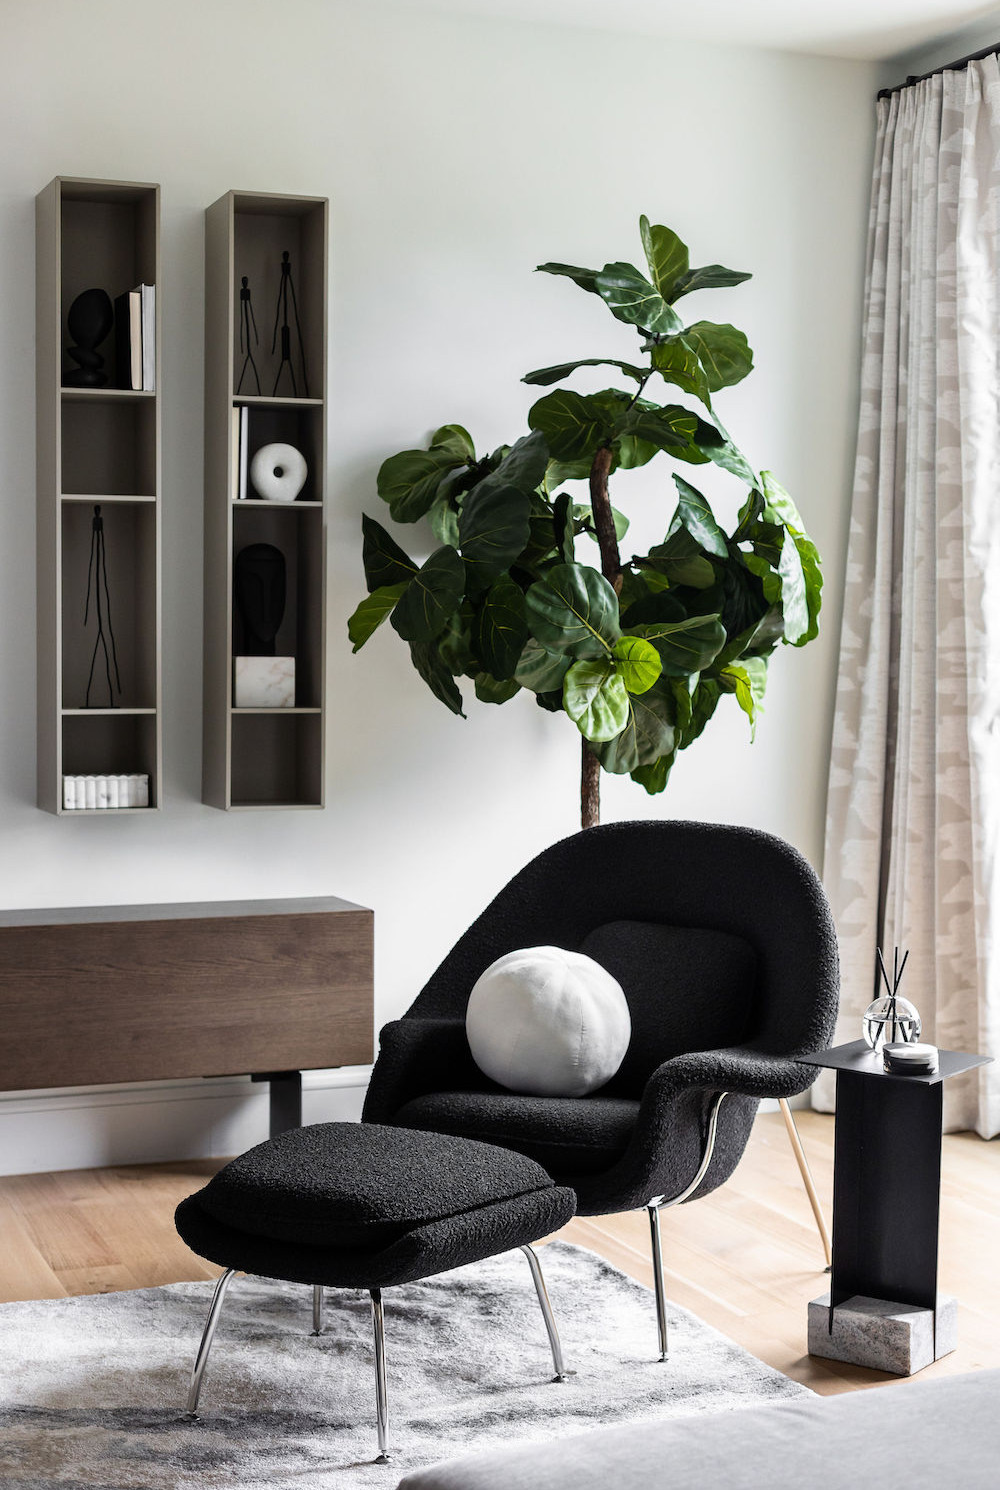 beyond-interior-design-black-accent-chair-white-sphere-pillow